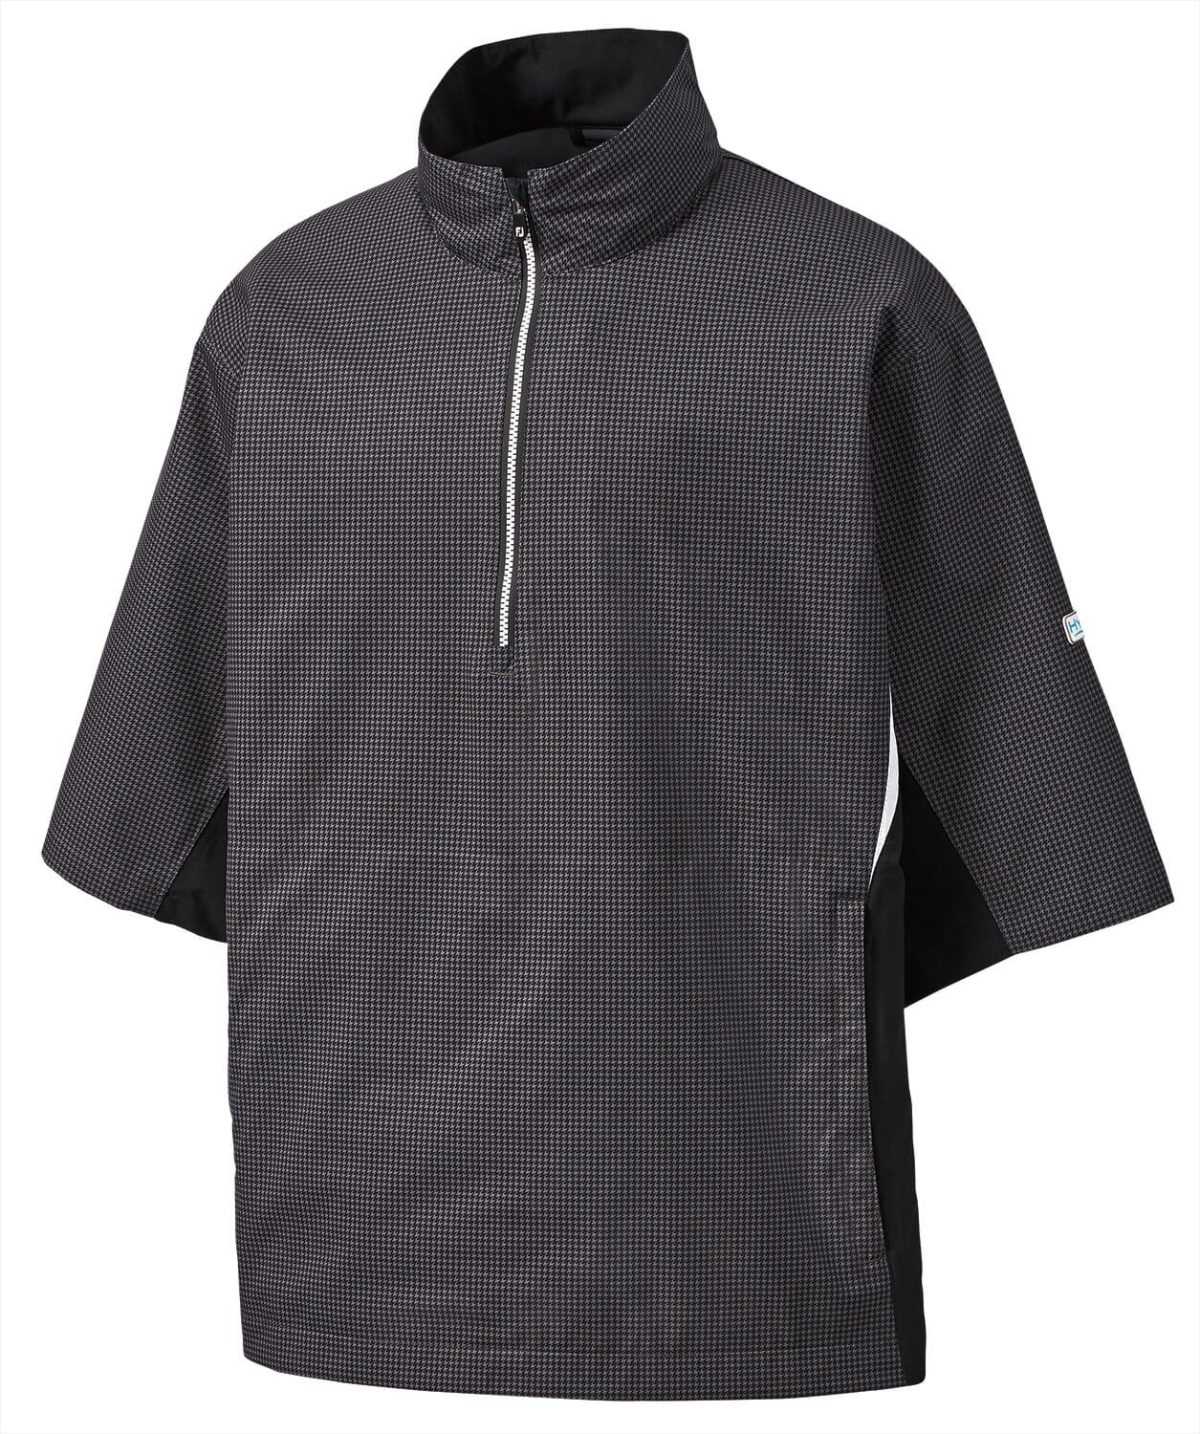 FootJoy Men's Hydrolite Short Sleeve Golf Rain Shirt in Charcoal/Black Houndstooth, Size S